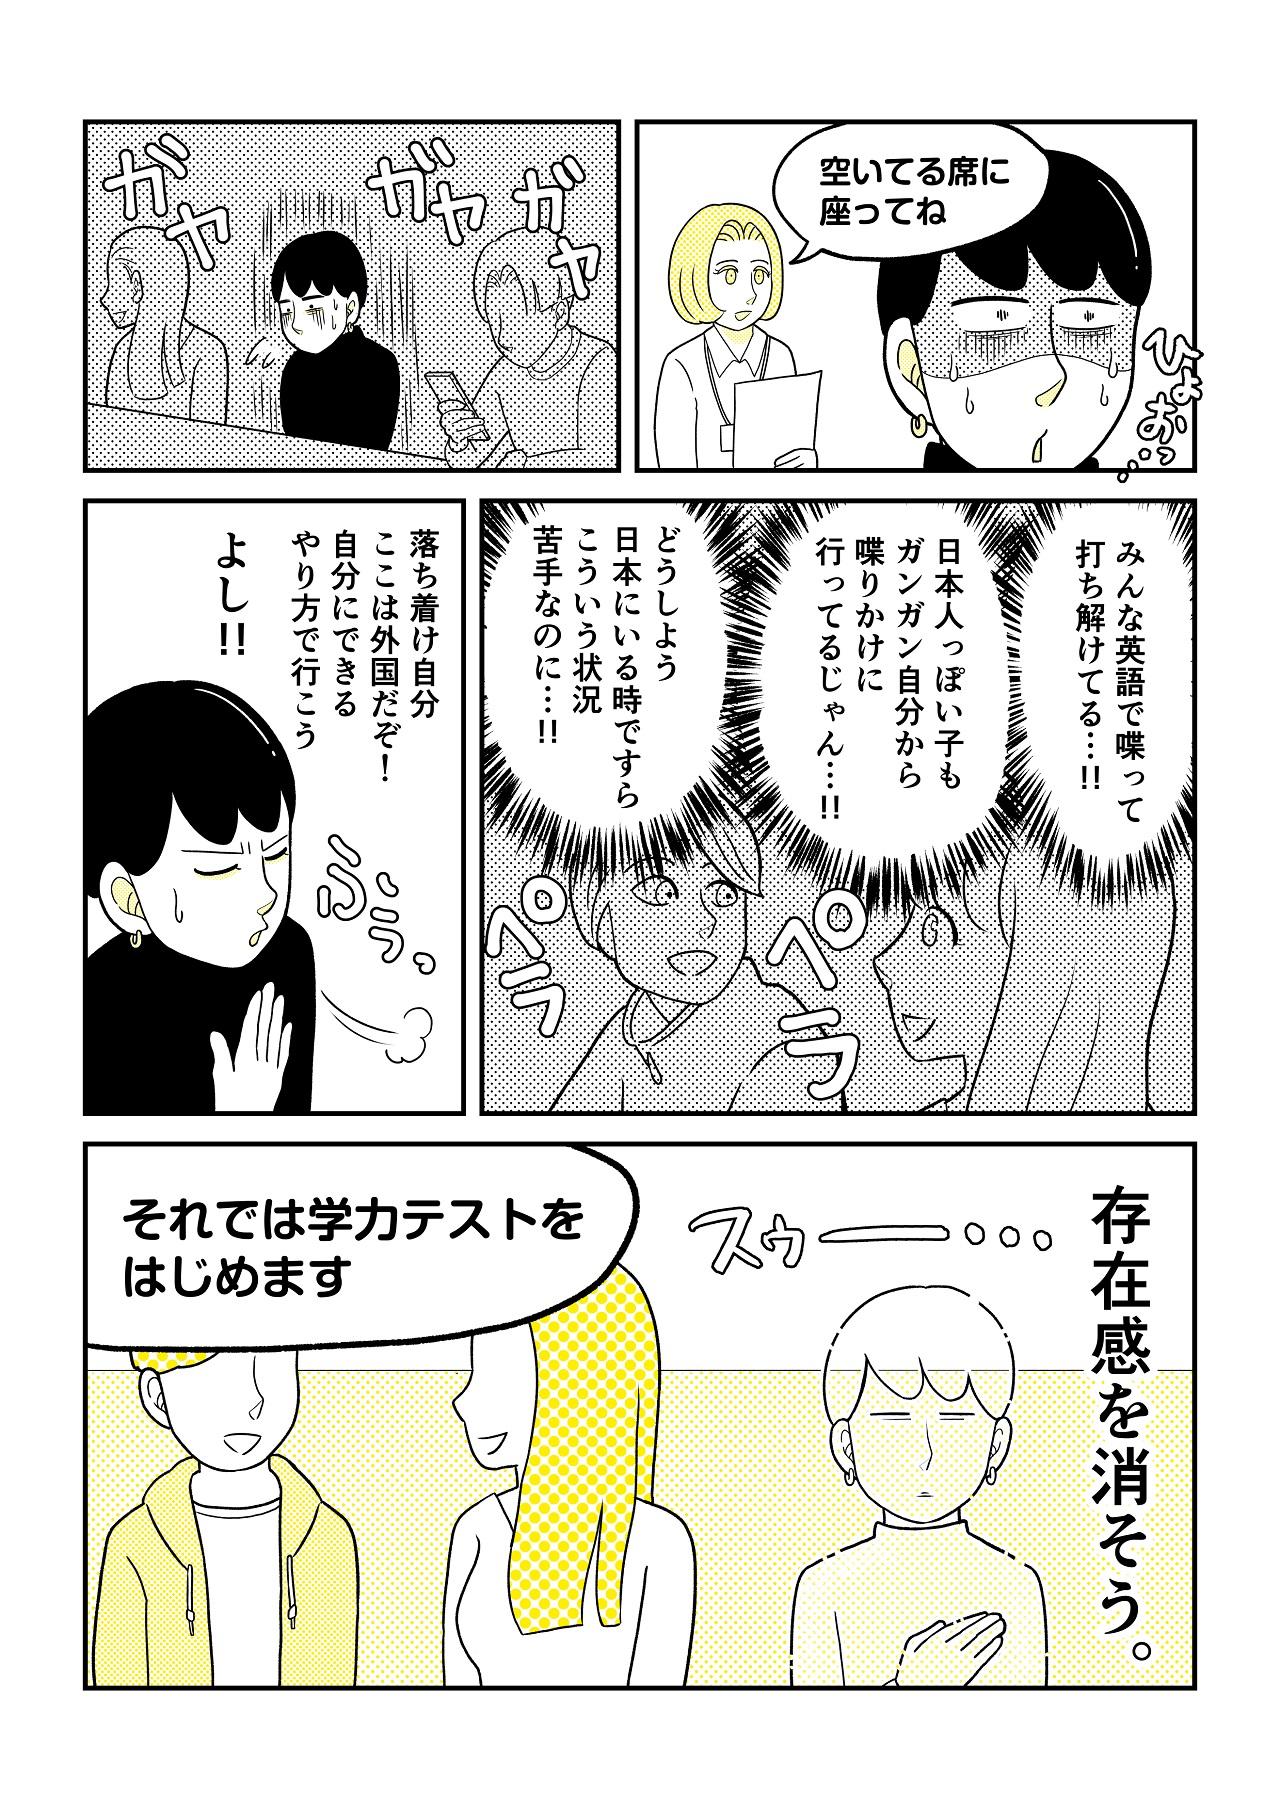 https://www.ryugaku.co.jp/column/images/06_04_1280.jpg